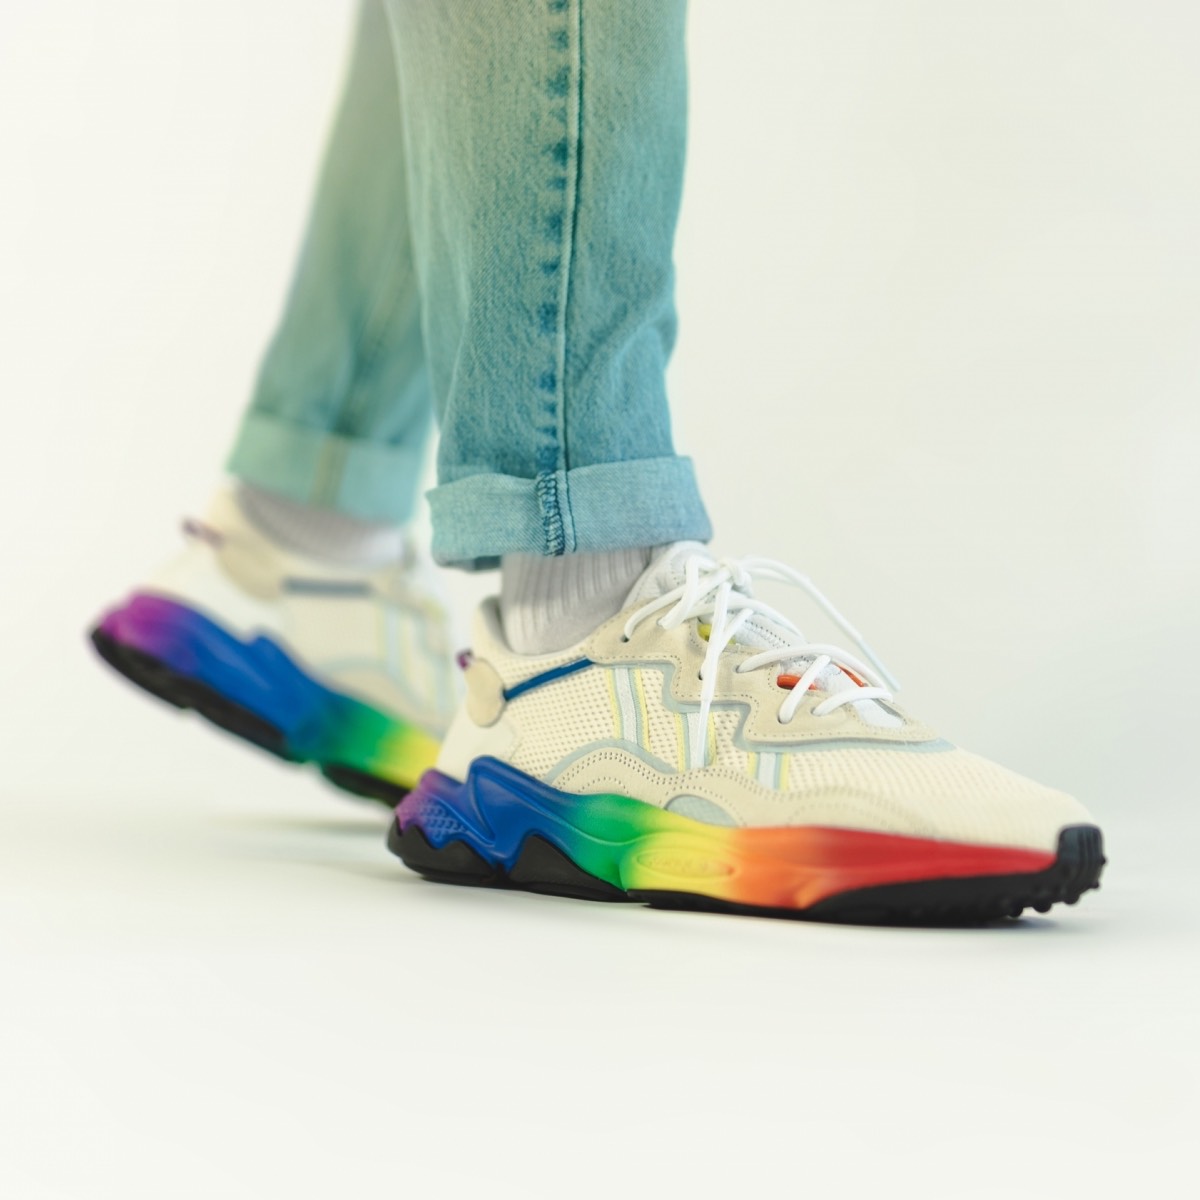 Adidas Ozweego
« Pride Pack »